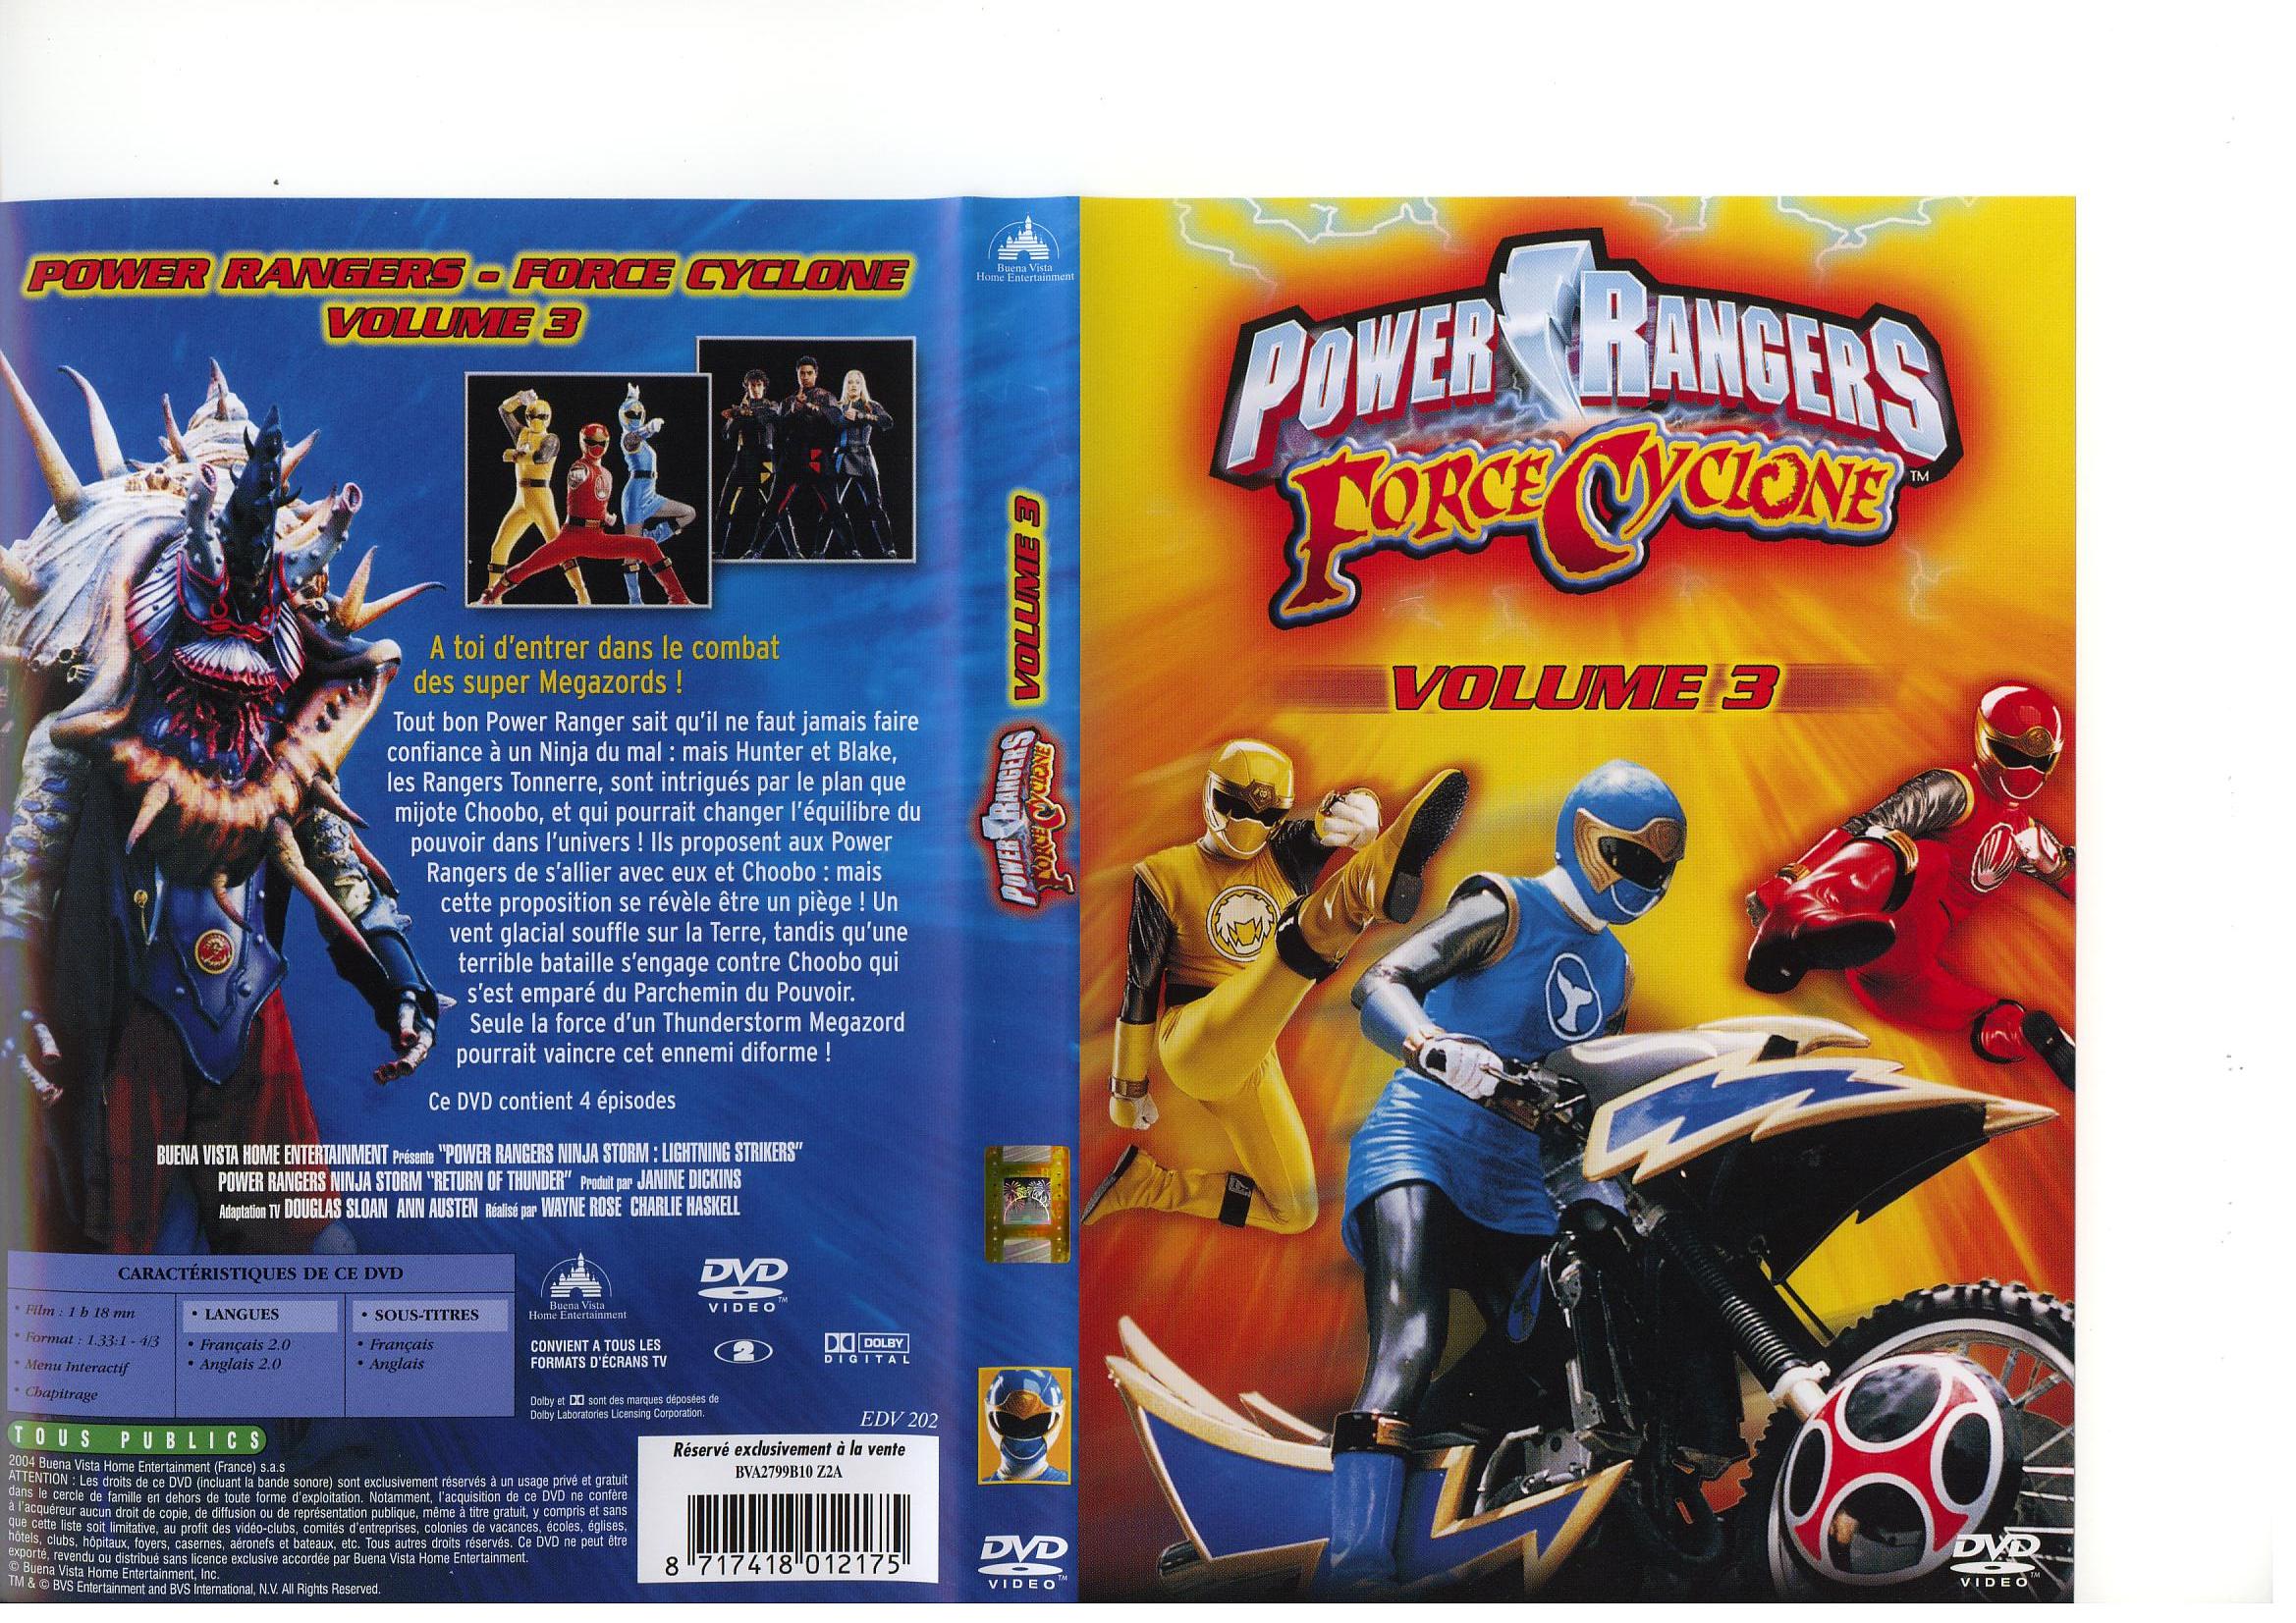 Jaquette DVD Power rangers vol 3